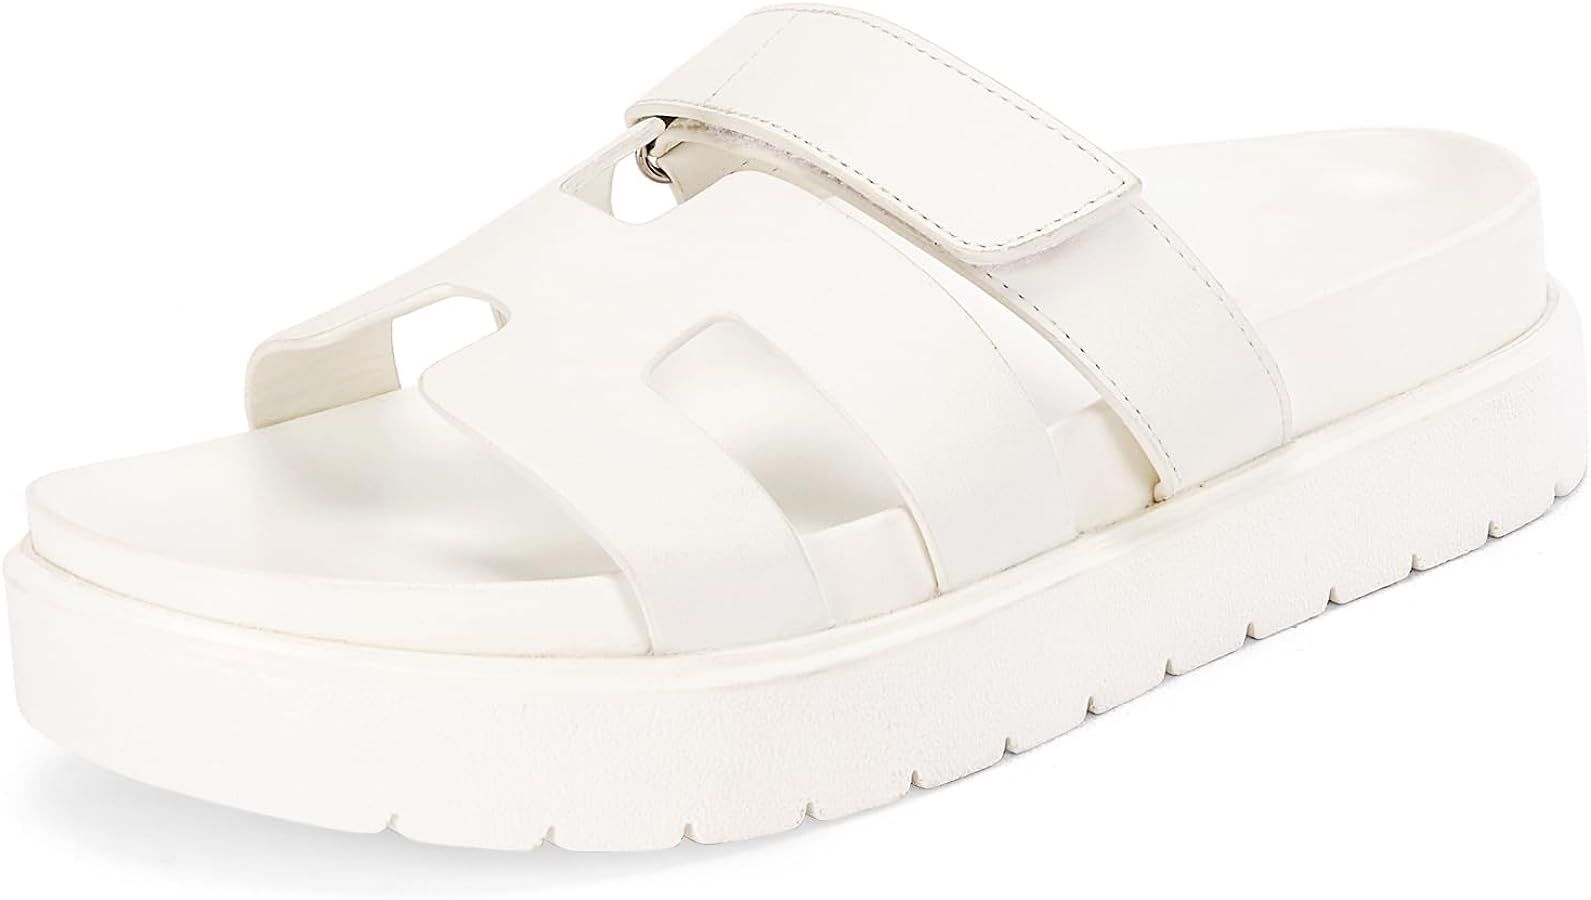 Platform Sandals For Women Slip On Thick Sole Slide Sandals Open Toe Non Slip Summer Flats Shoes ... | Amazon (US)